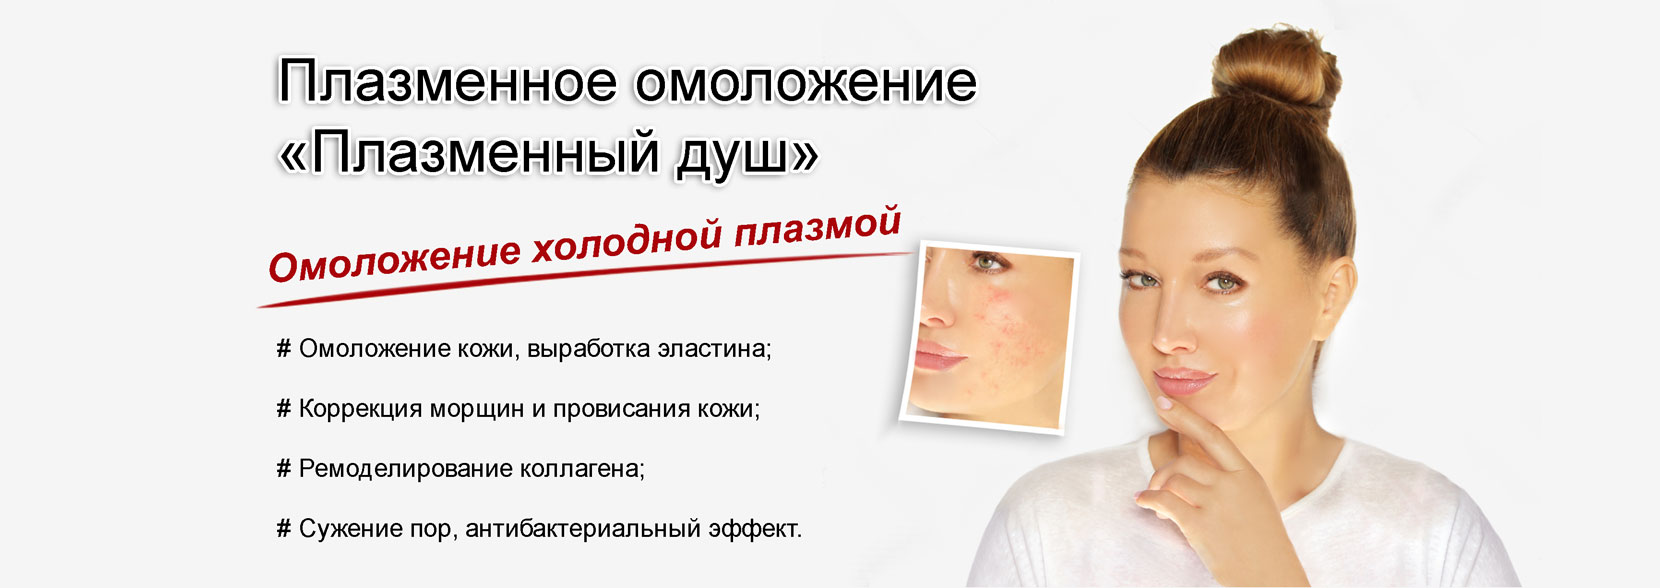 acne-marks-treating-acne-scars-acne-scar-removal-Plasma-shower1